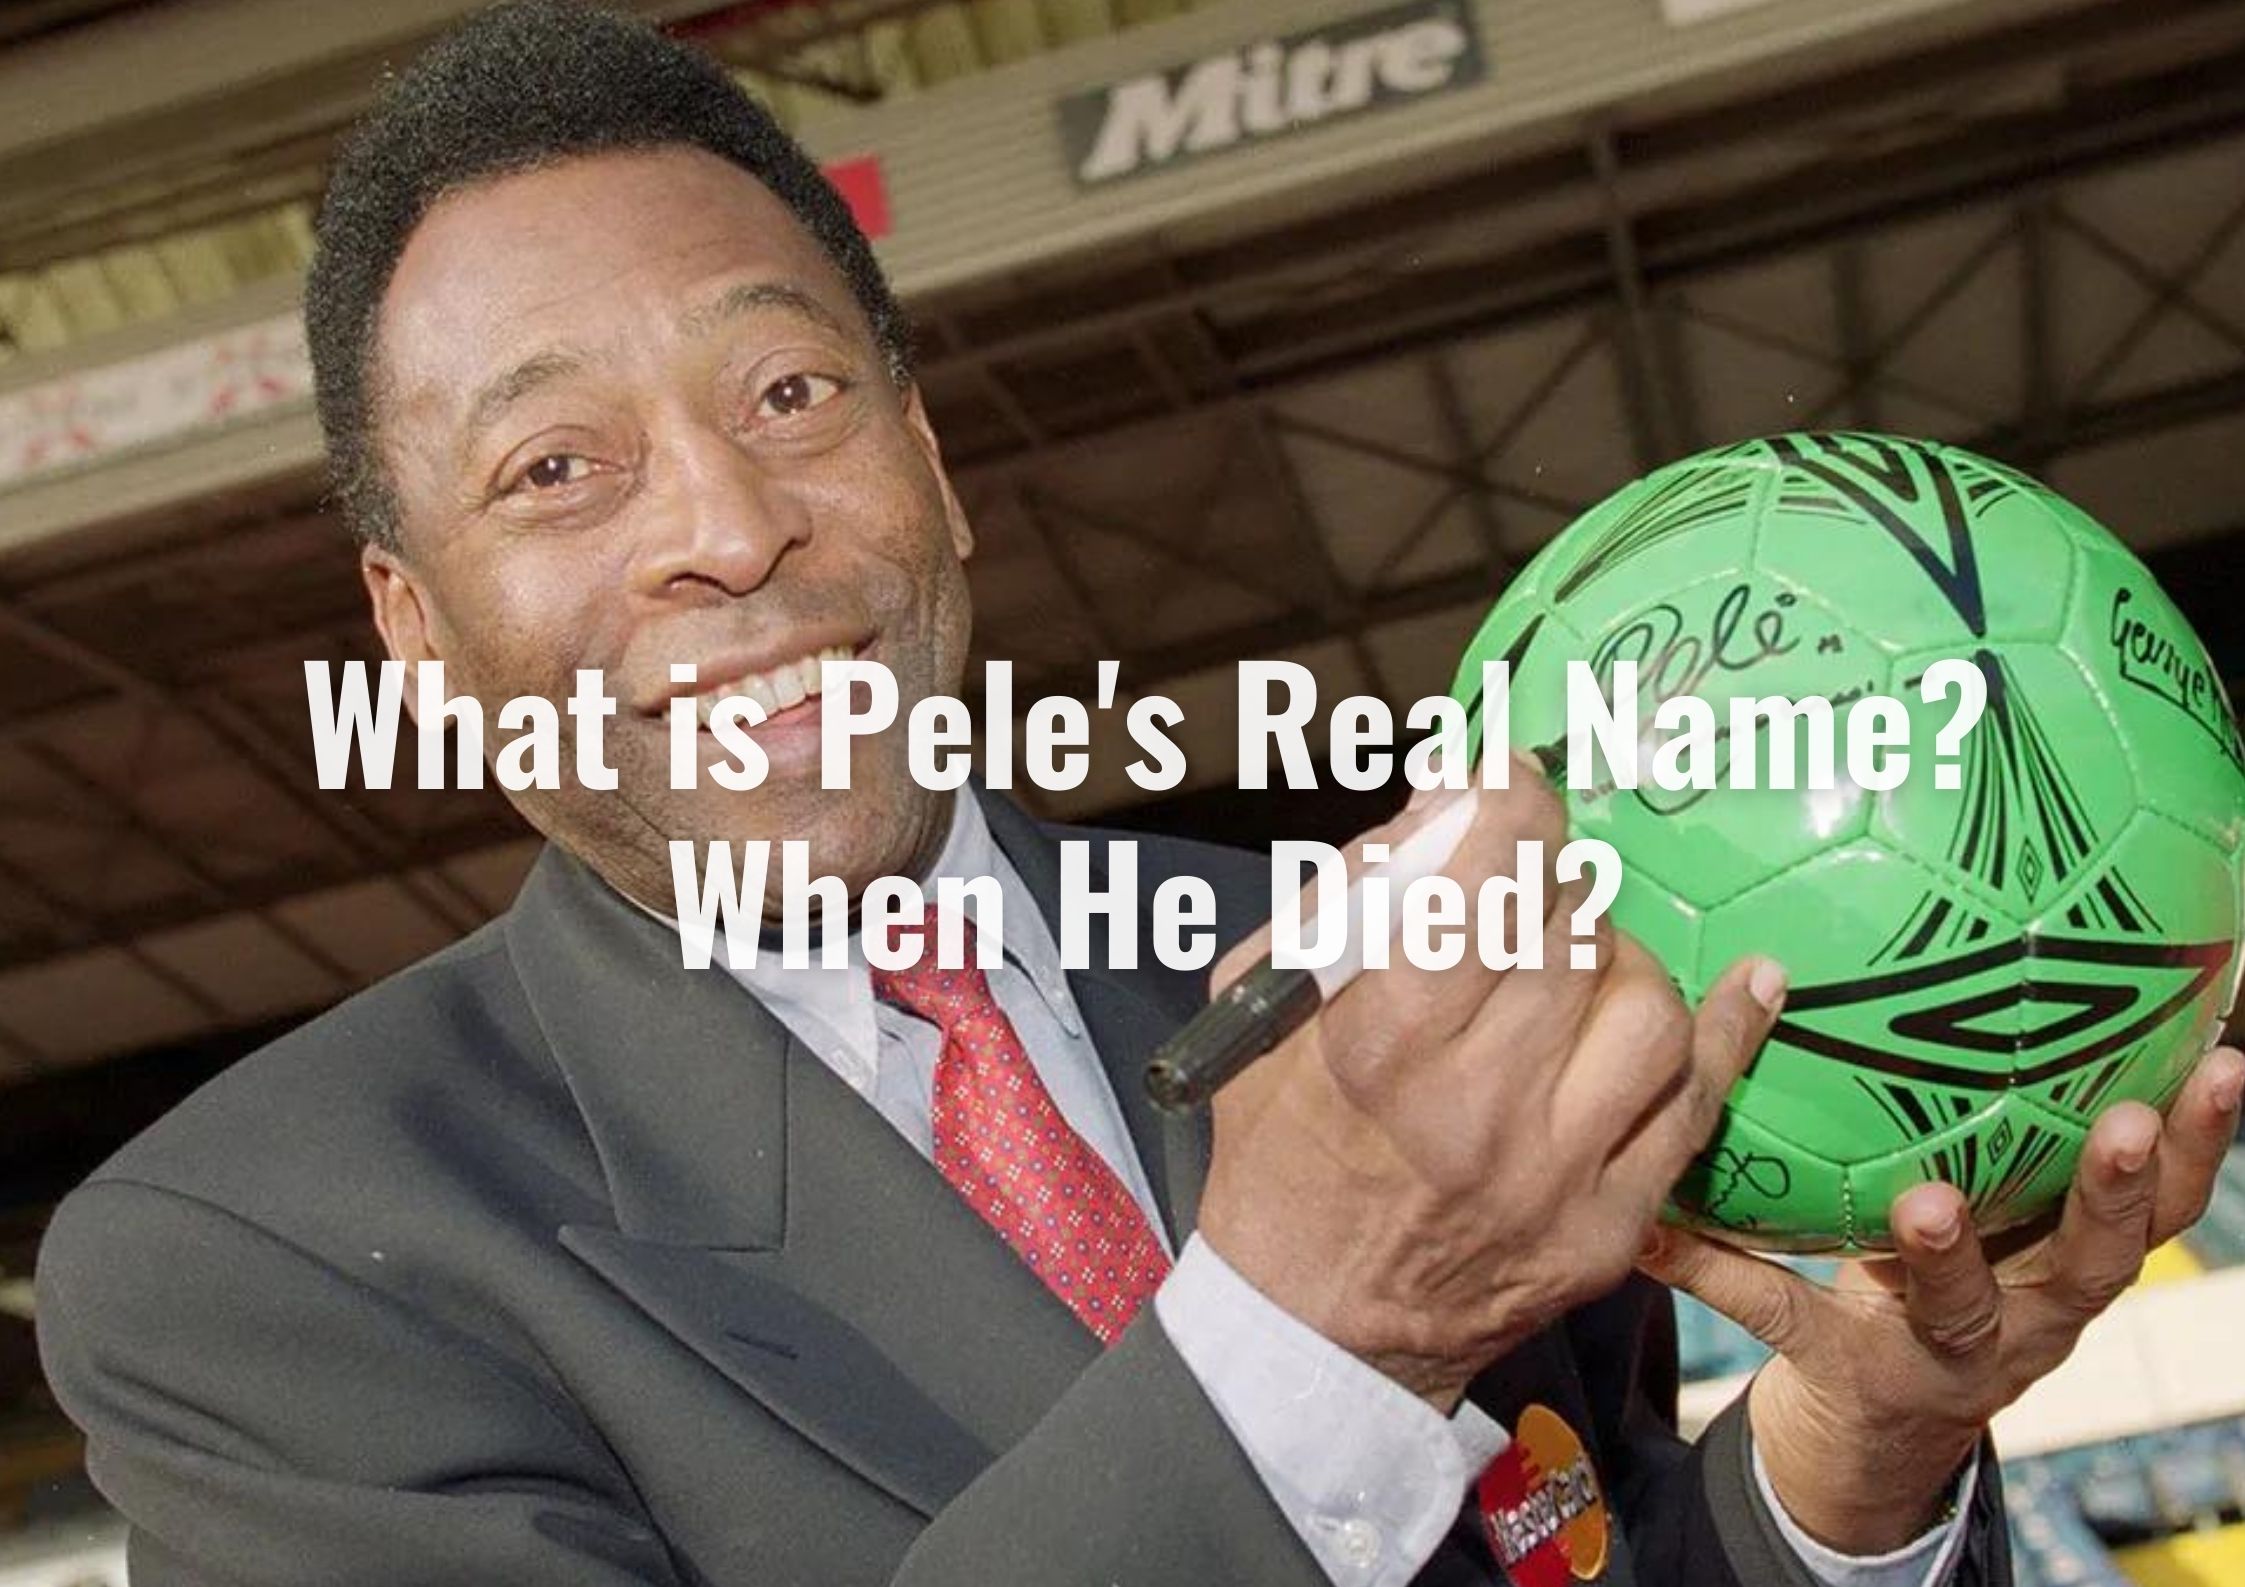 Remembering Pelé